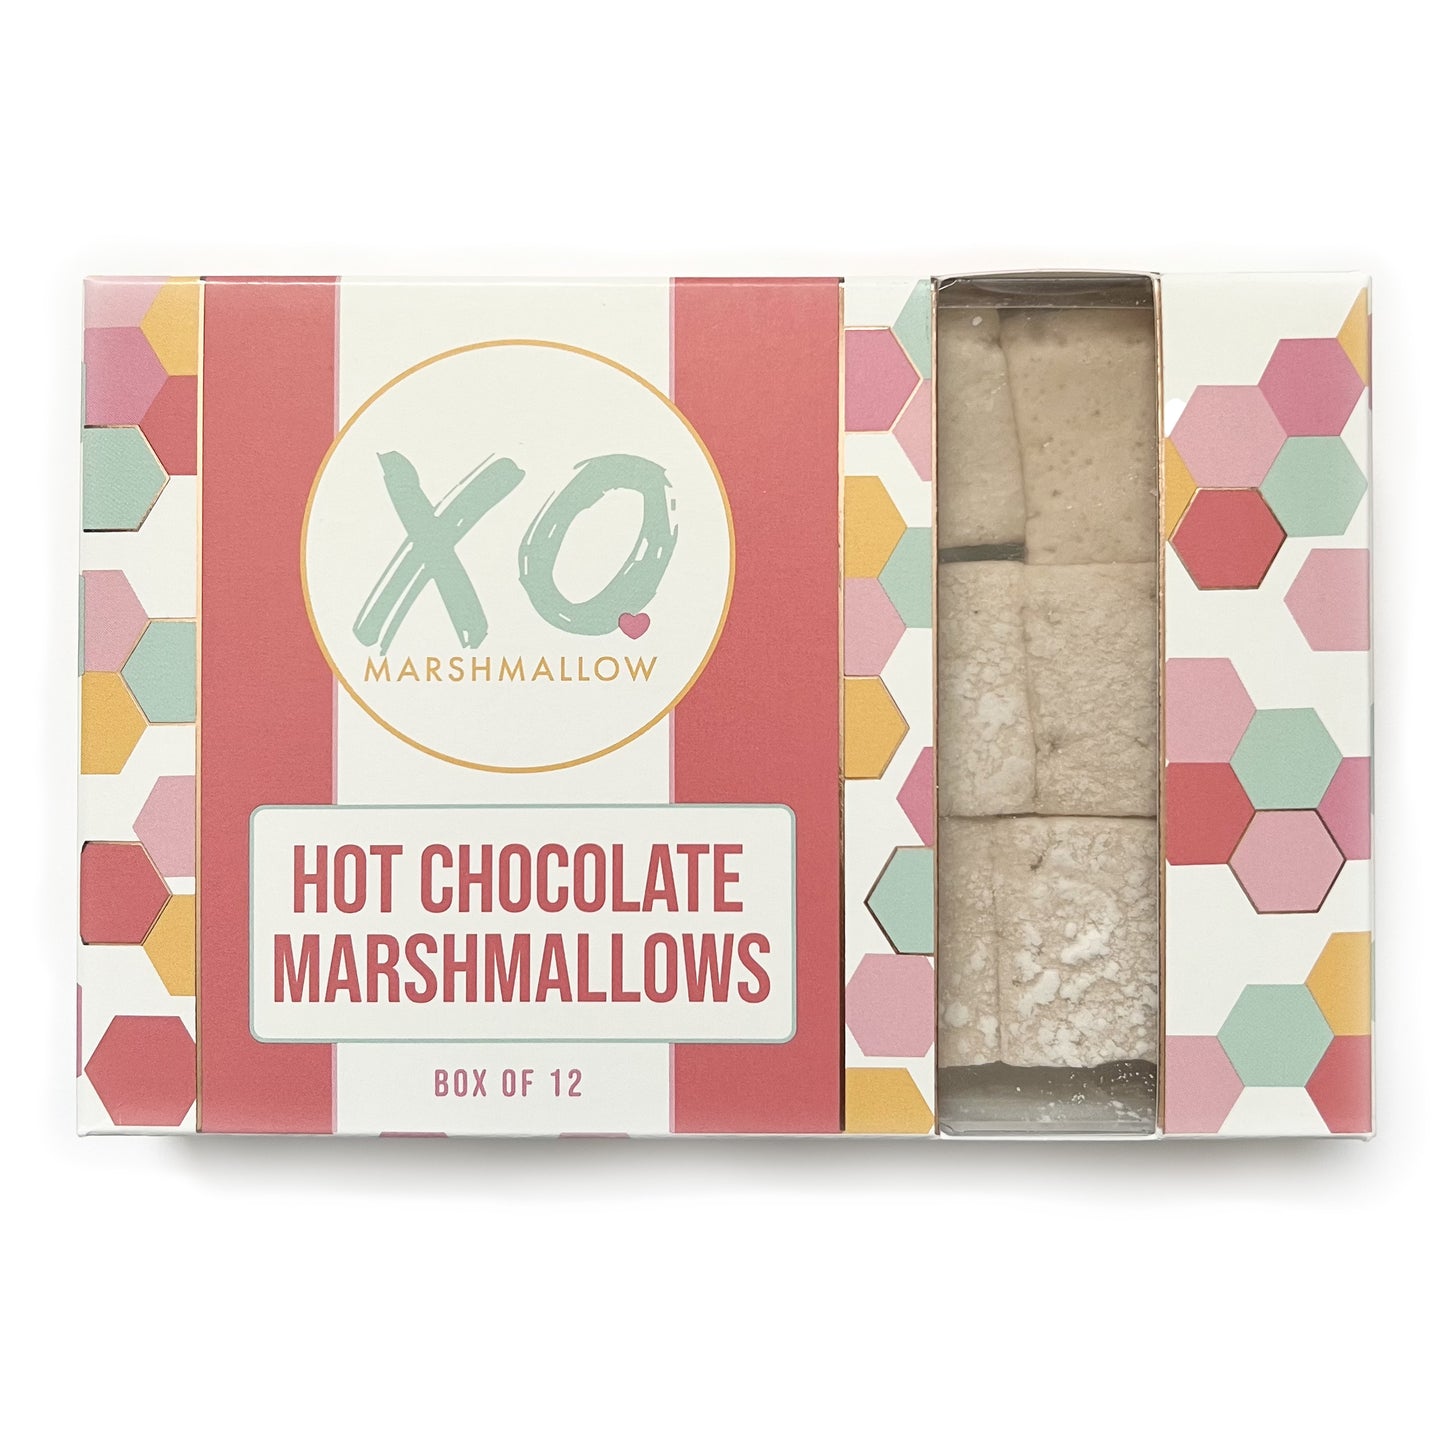 XO Hot Chocolate Marshmallows - Box of 12